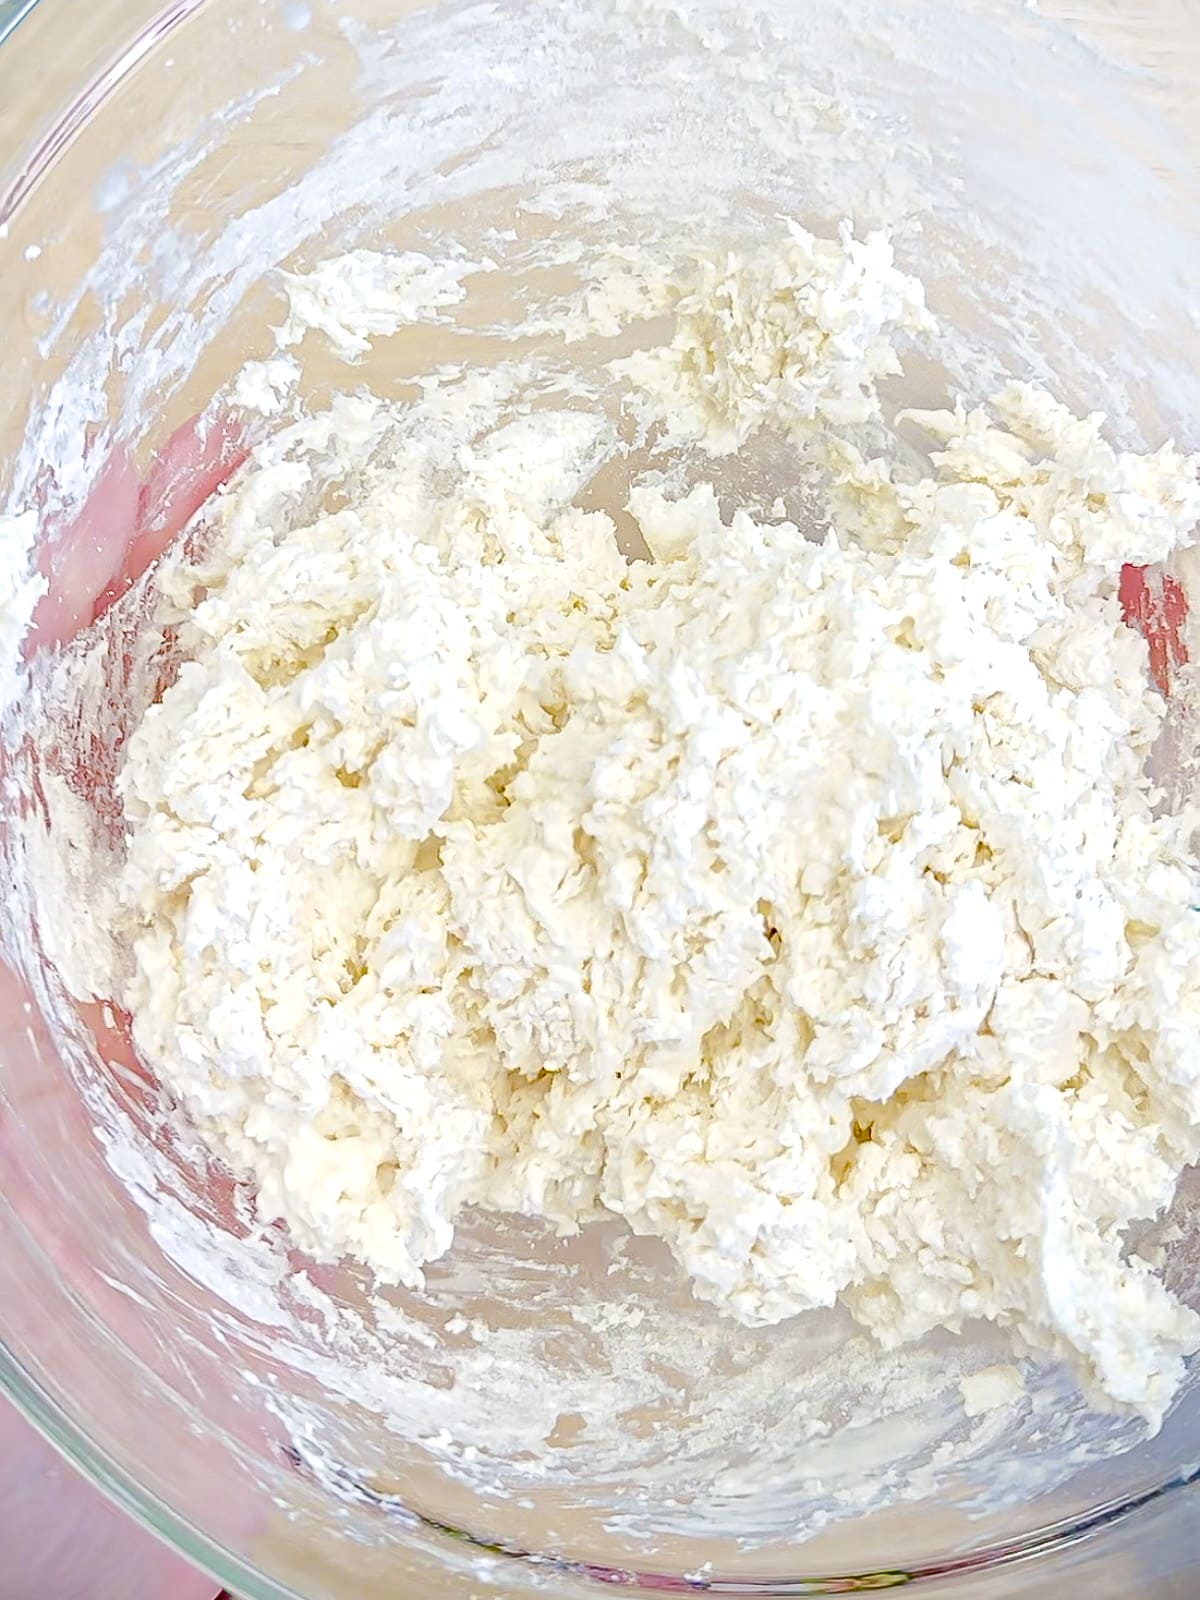 Texture of biscuit dough for drop biscuits.